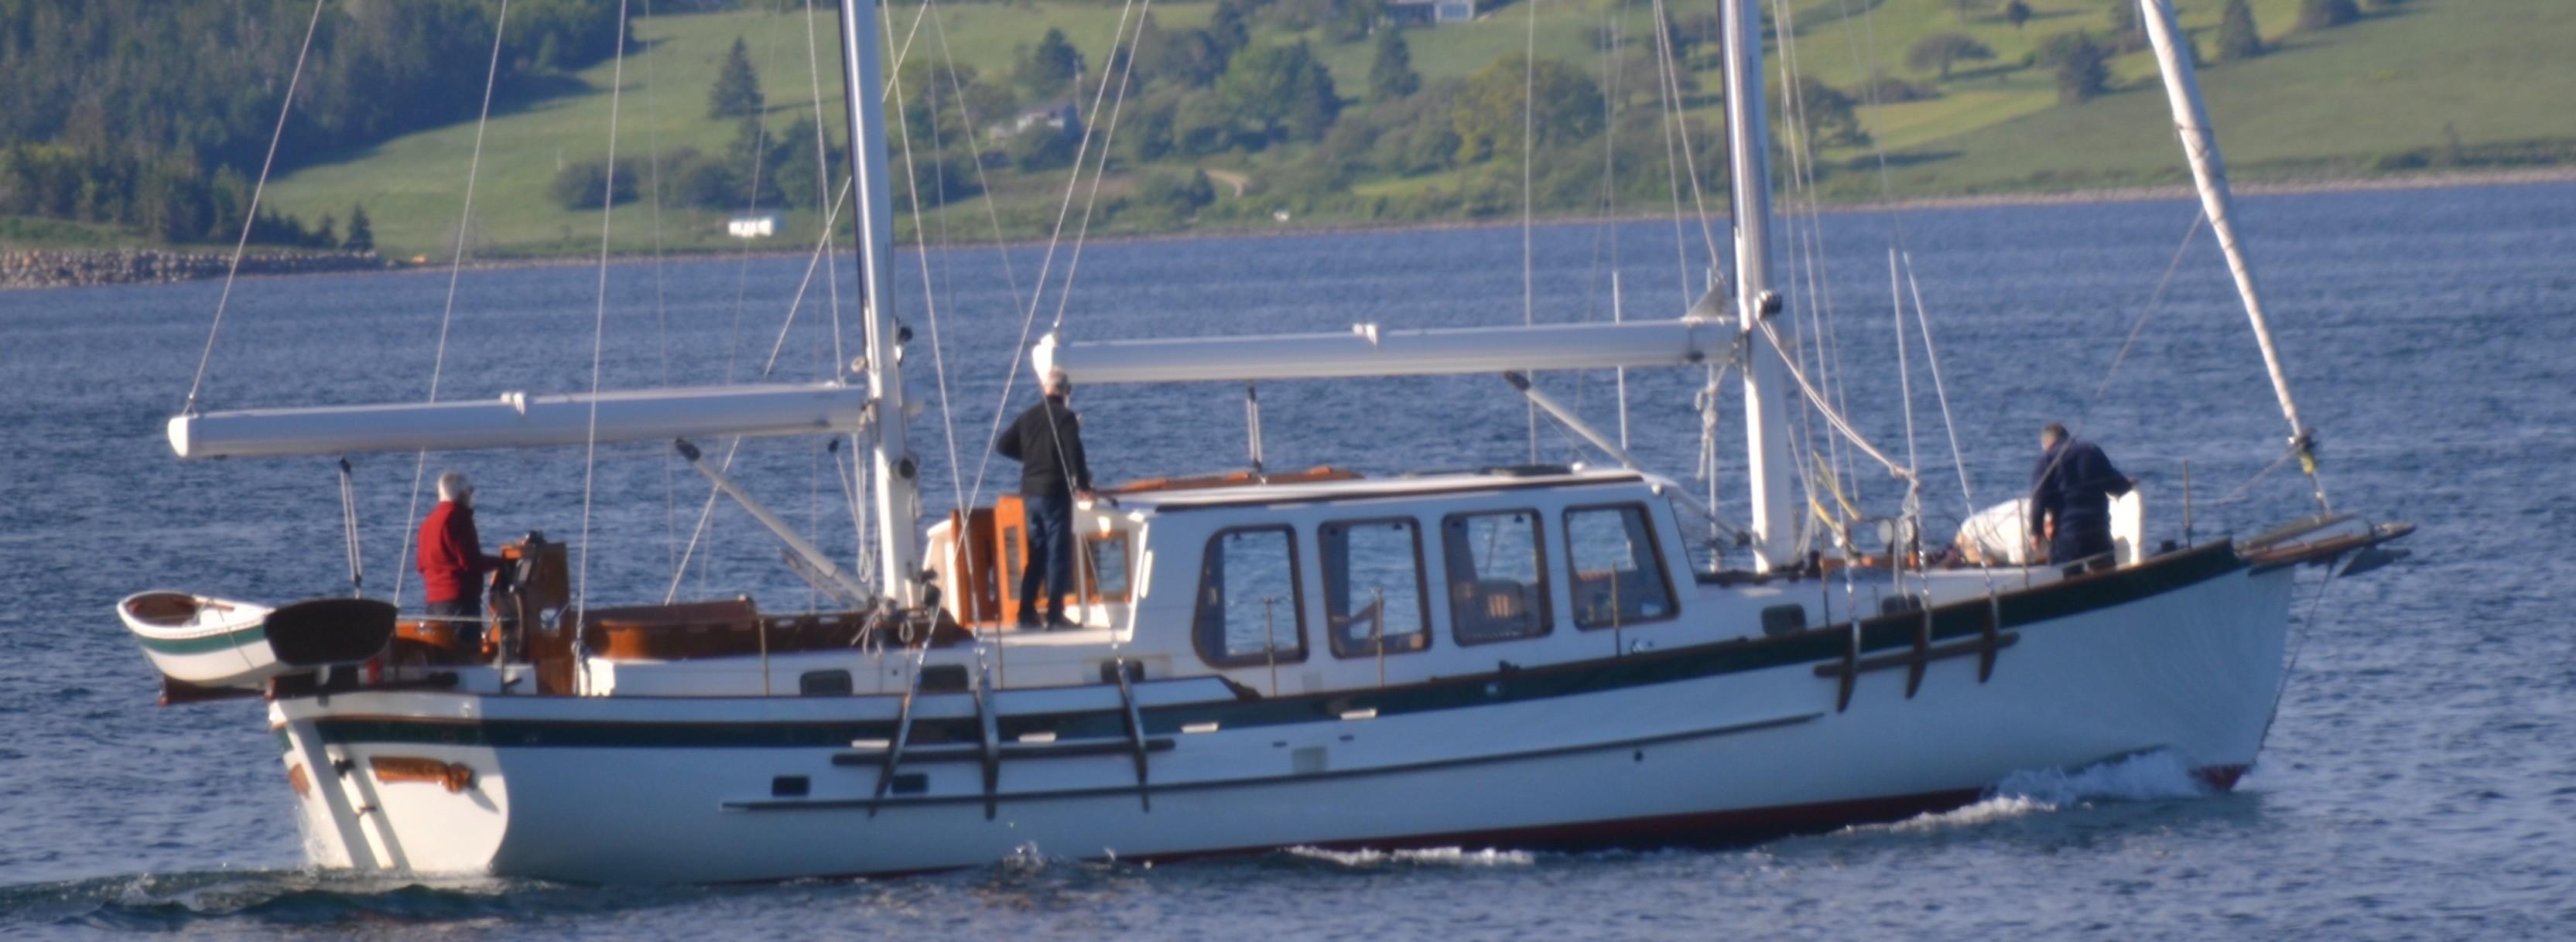 Annie J Yacht For Sale 49 Covey Island Yachts Ct Denison Yacht Sales 